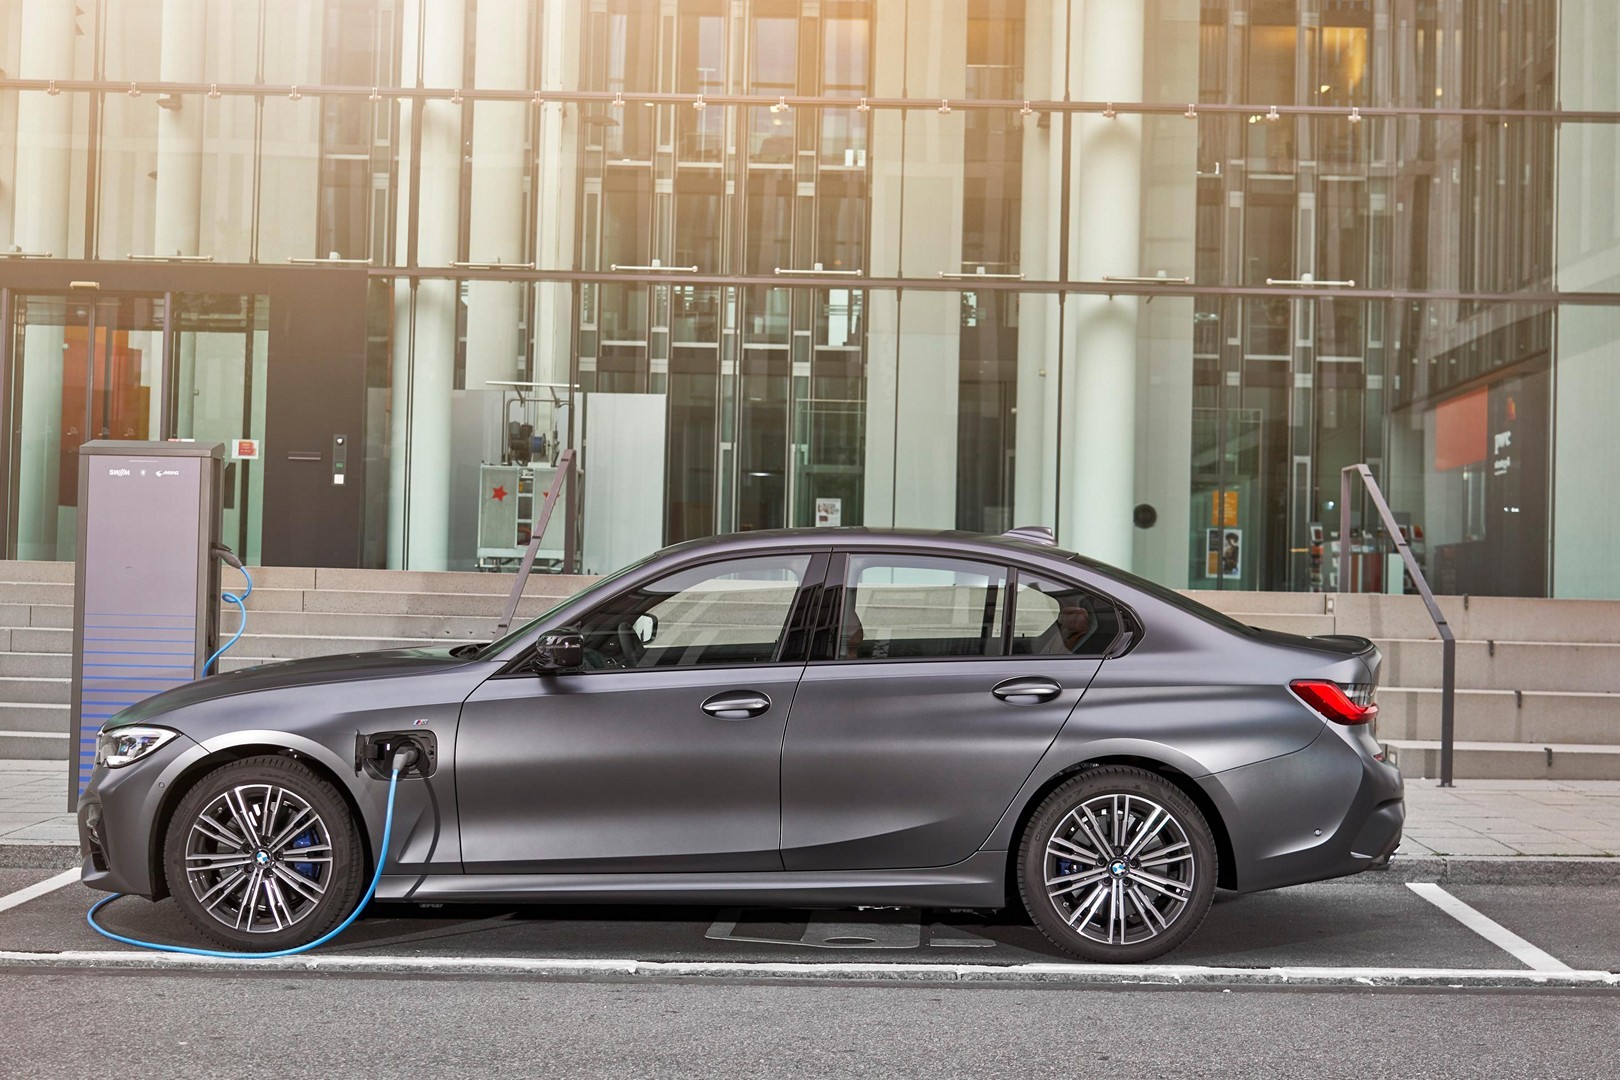 New BMW 330e PlugIn Hybrid Gets Worse Fuel Economy Ratings Than 330i